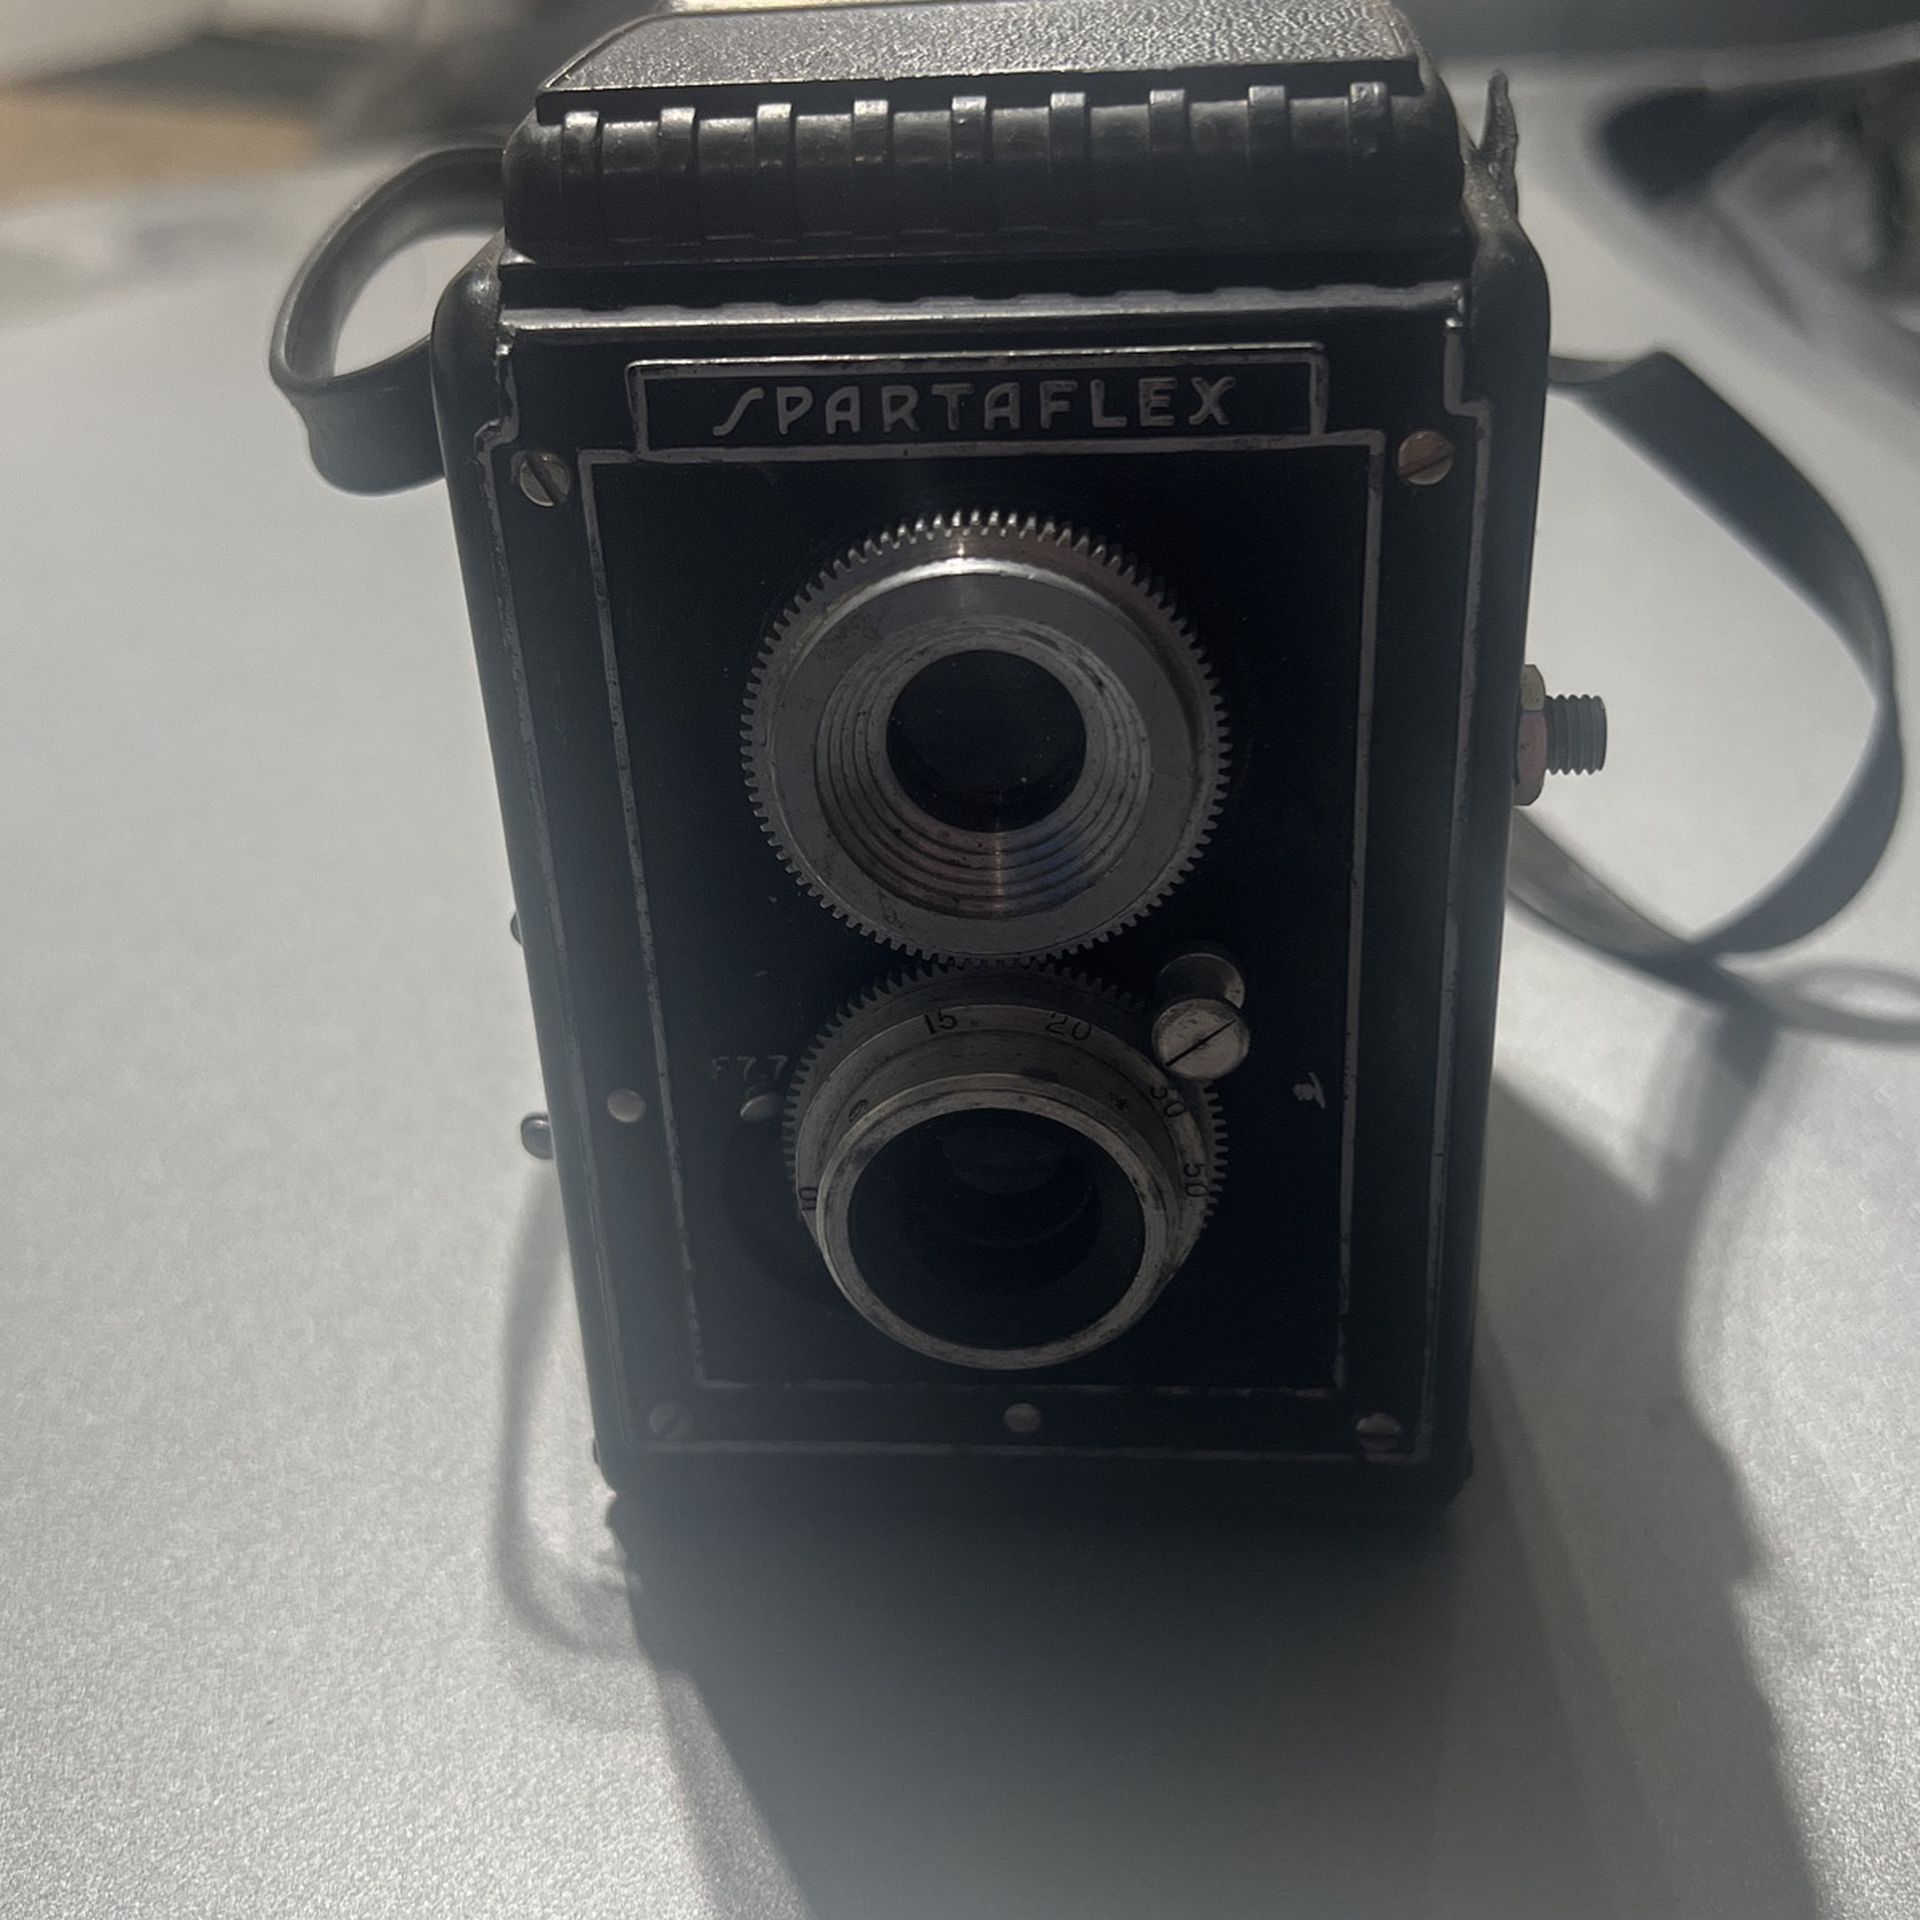 Spartaflex Camera 